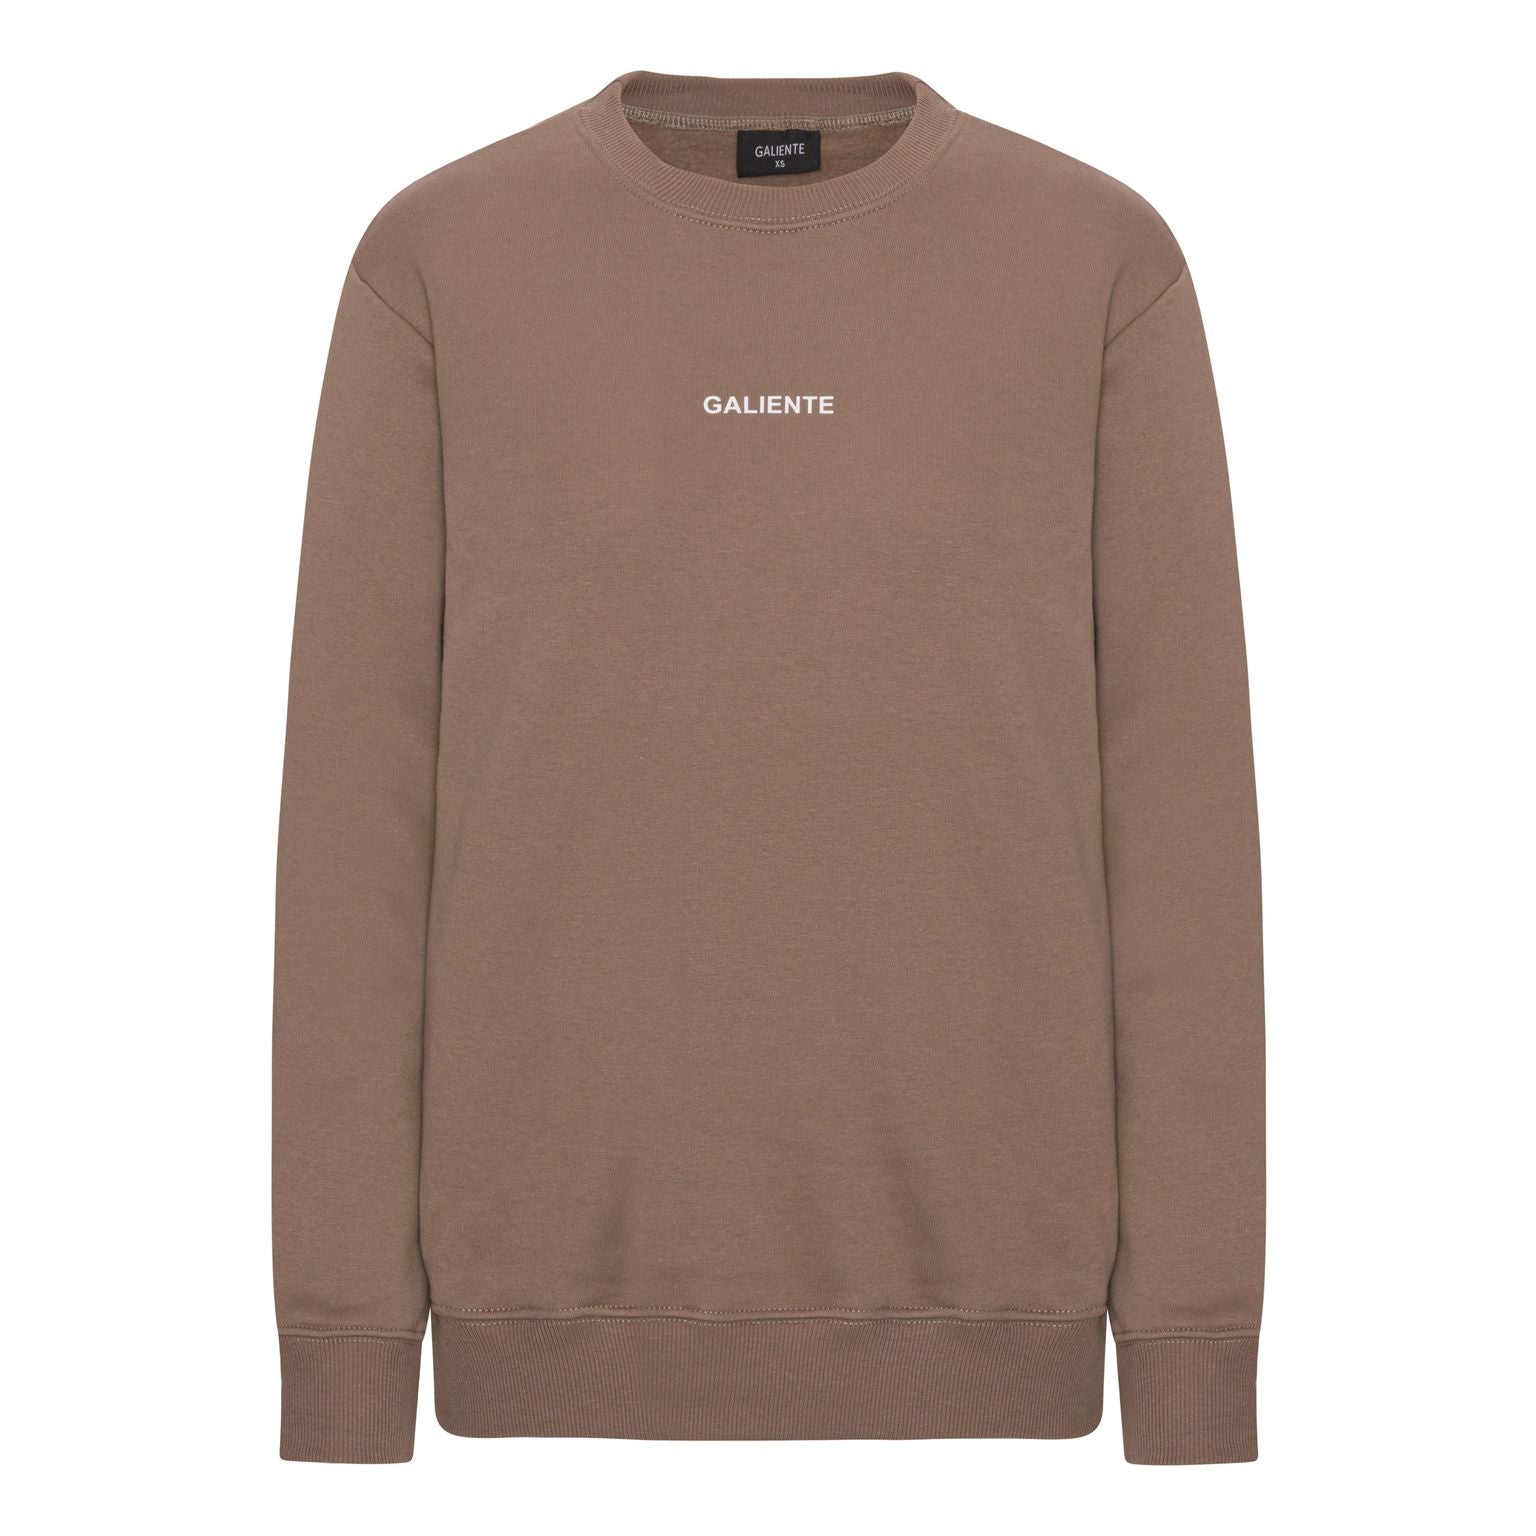 Brown sweatshirt